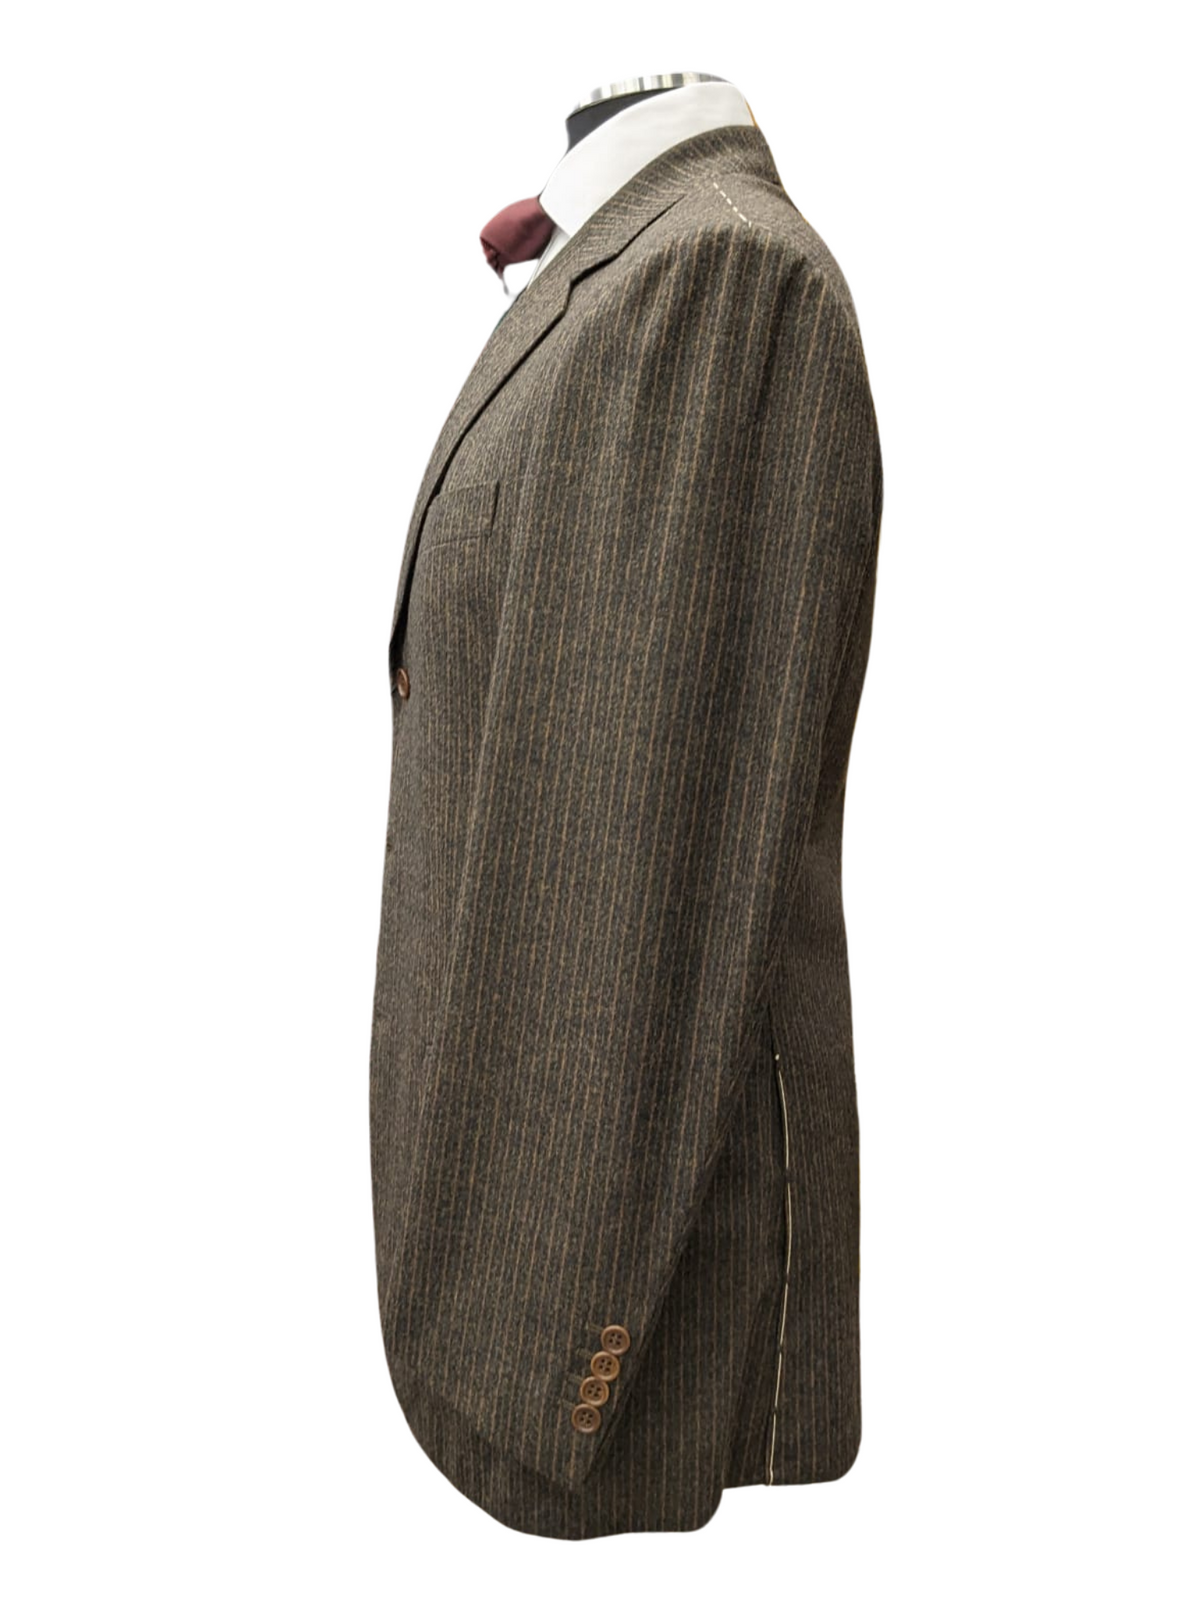 Sartoria Partenopea Mens 40L Brown Pinstriped 3 Button 2 Piece 100% Wool Suit